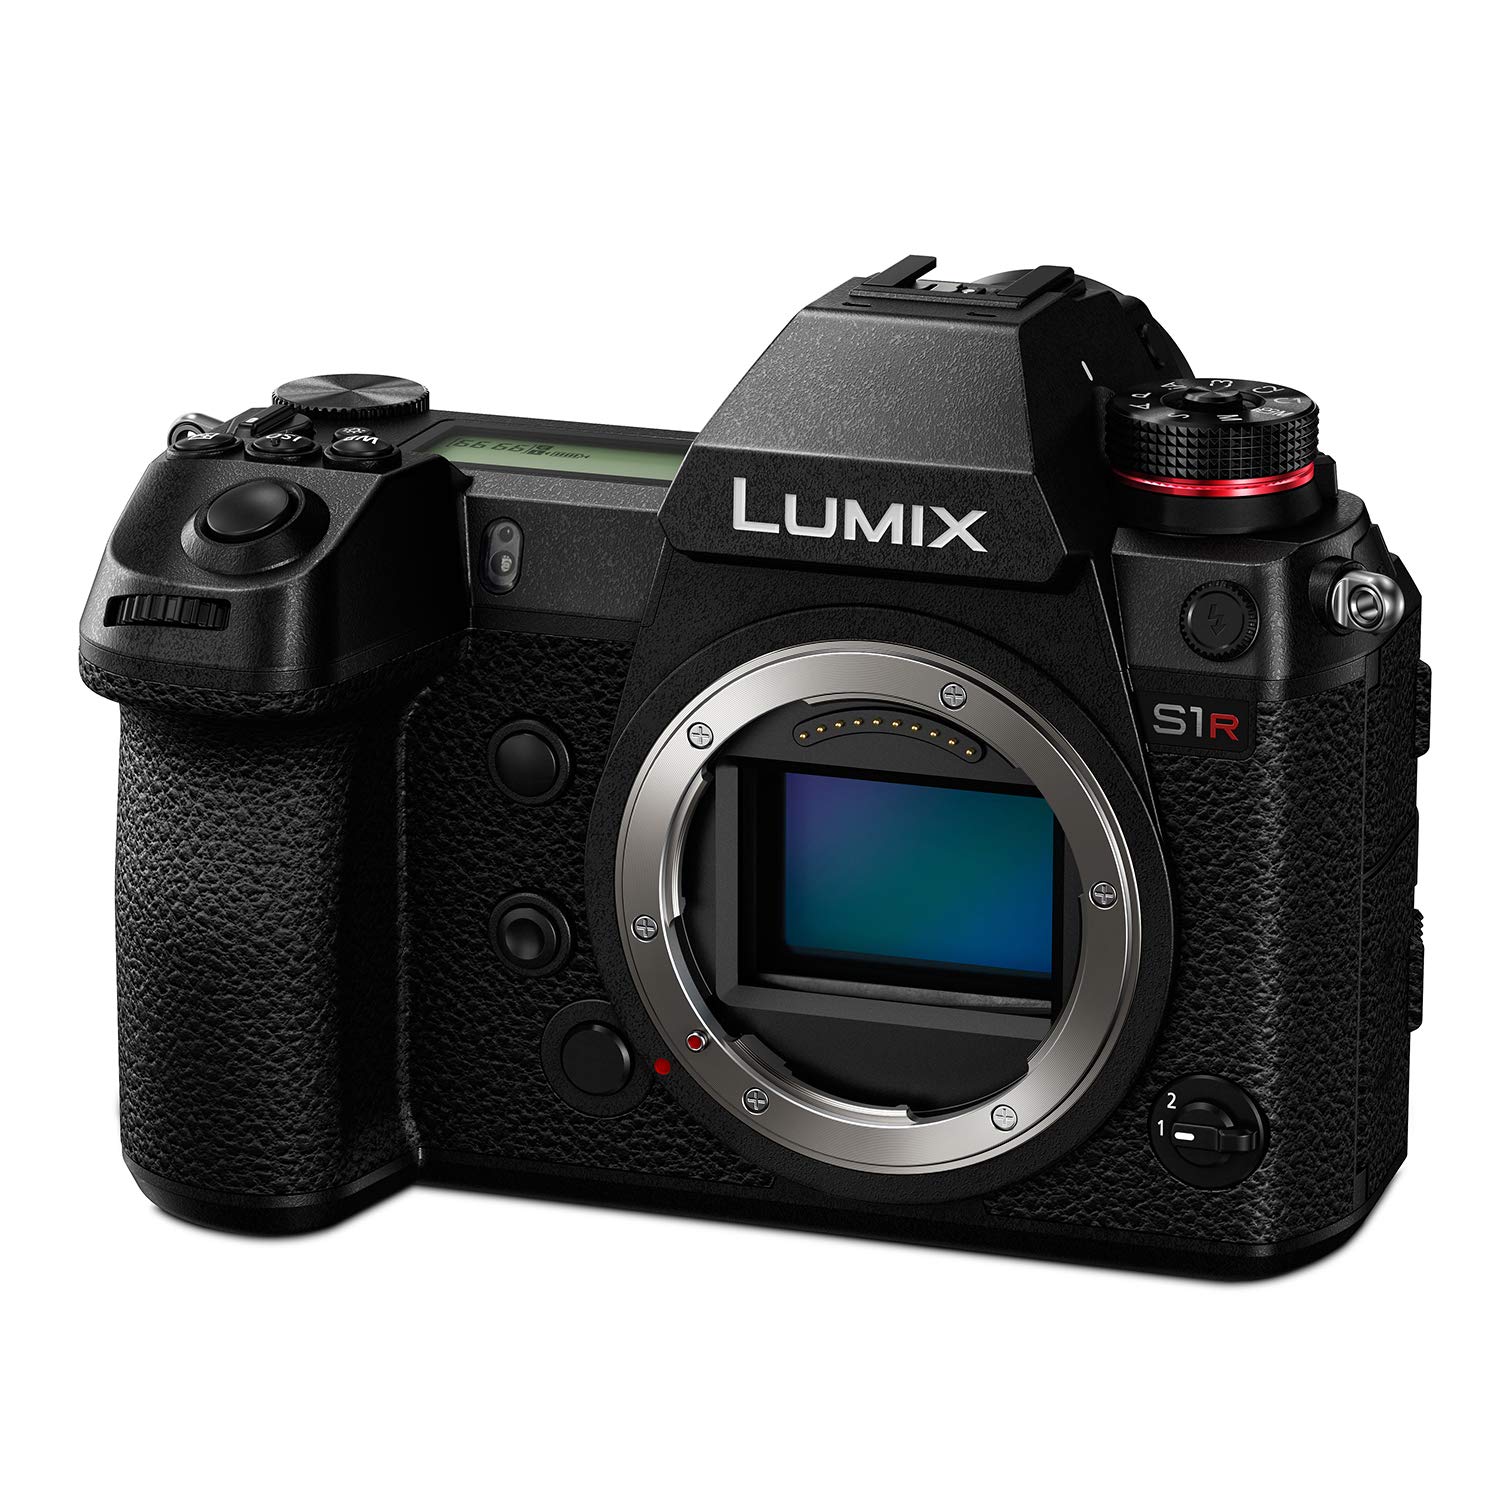 Panasonic LumixDC-S1Rミラーレスデジタルカメラ本体...